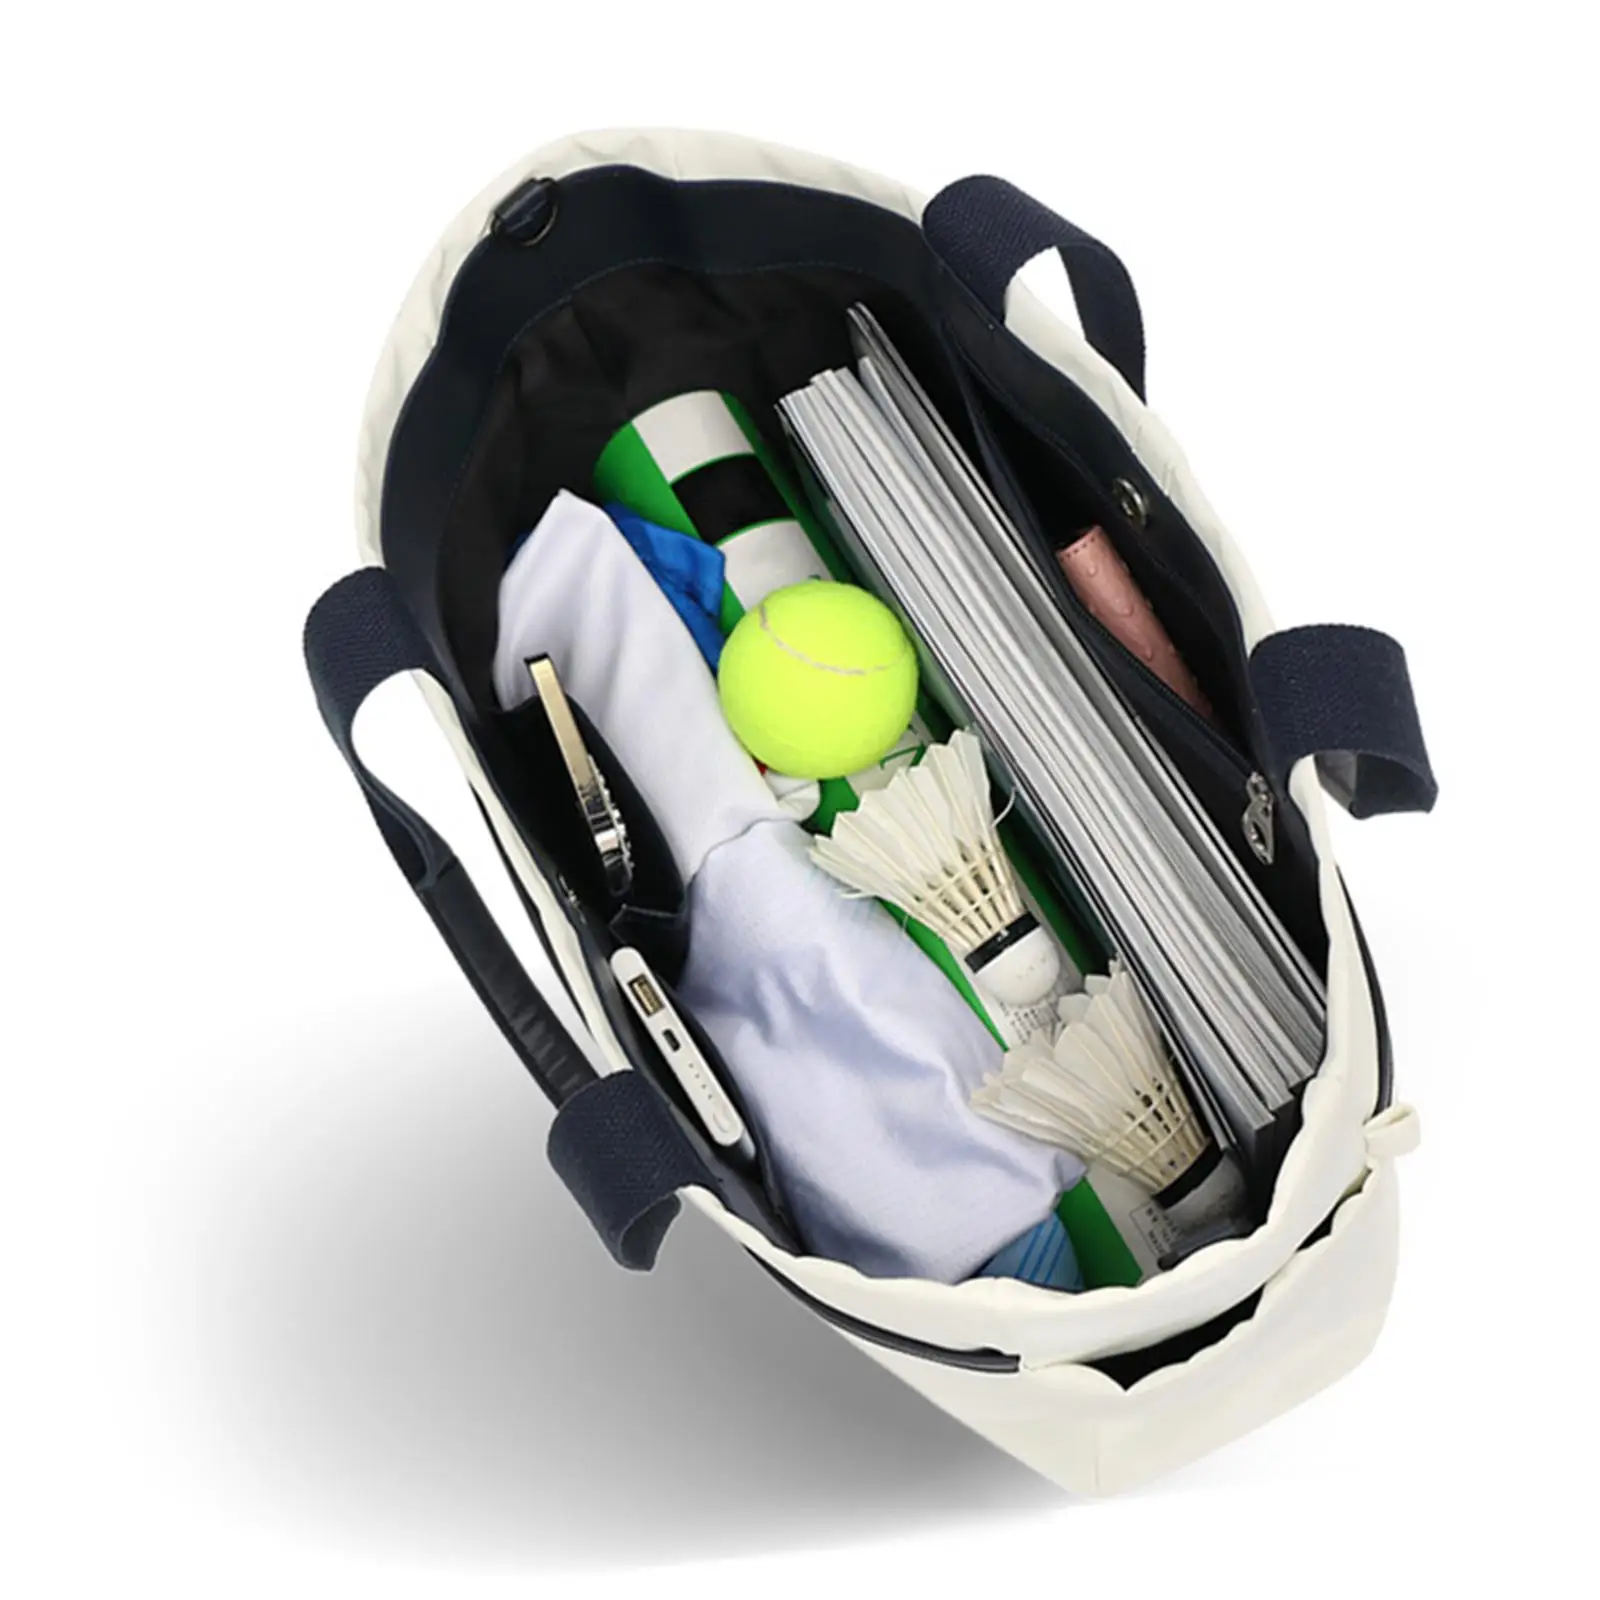 Tennis Tote Bag Water Resistant Storage Pickleball Racket Storage Professional Detachable Racquet Cover Pickleball Racket Bag